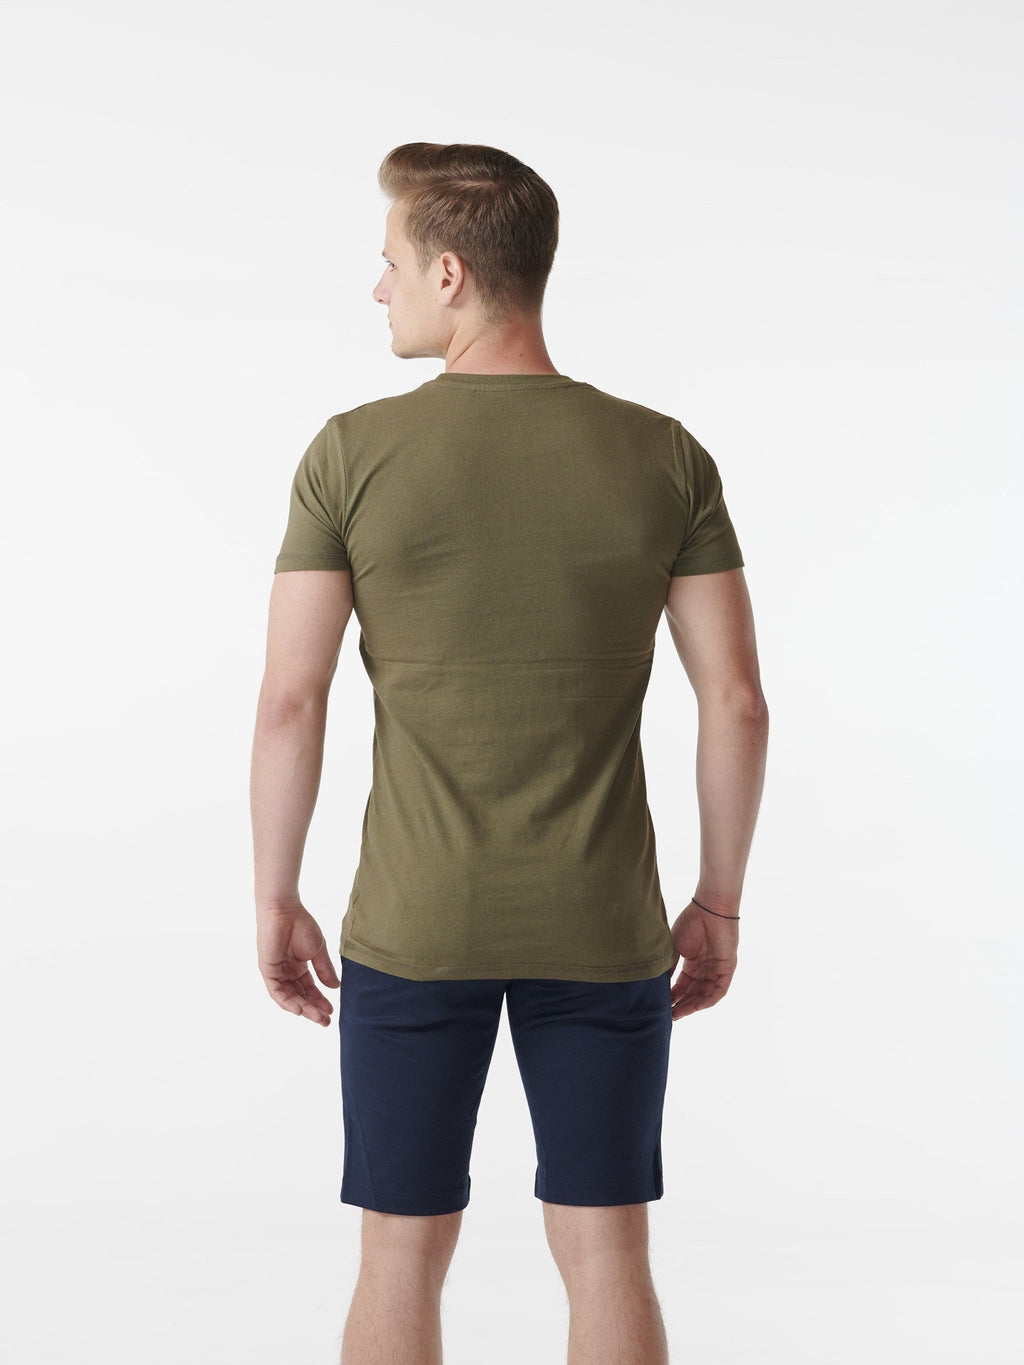 Camiseta muscular - Green del ejército